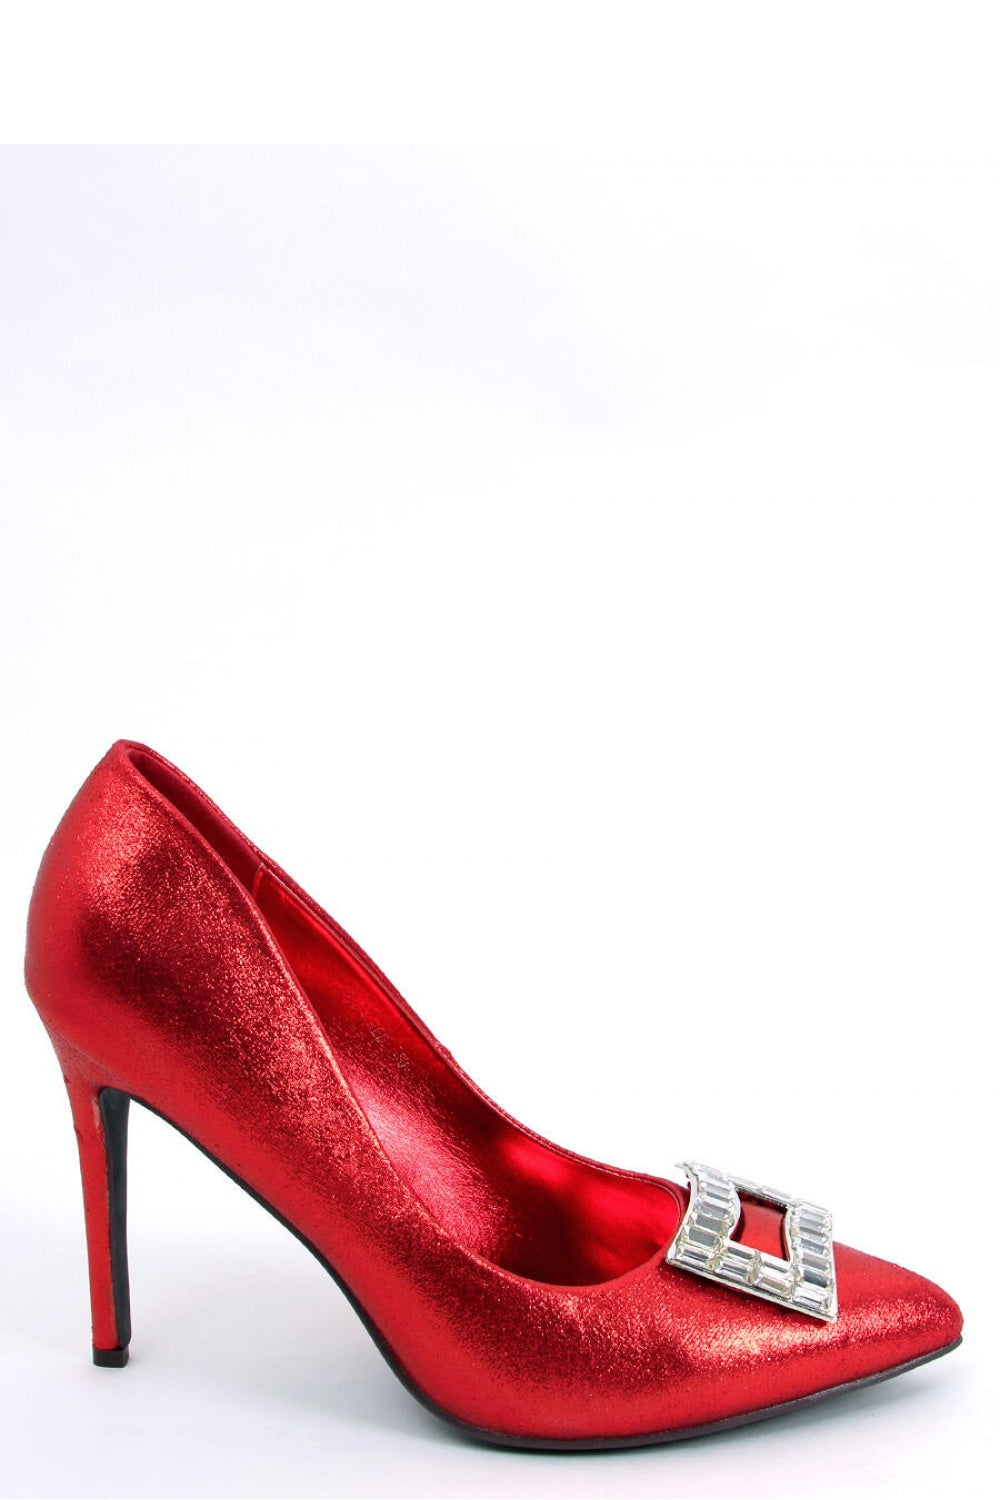 High heels model 174094 Inello Posh Styles Apparel